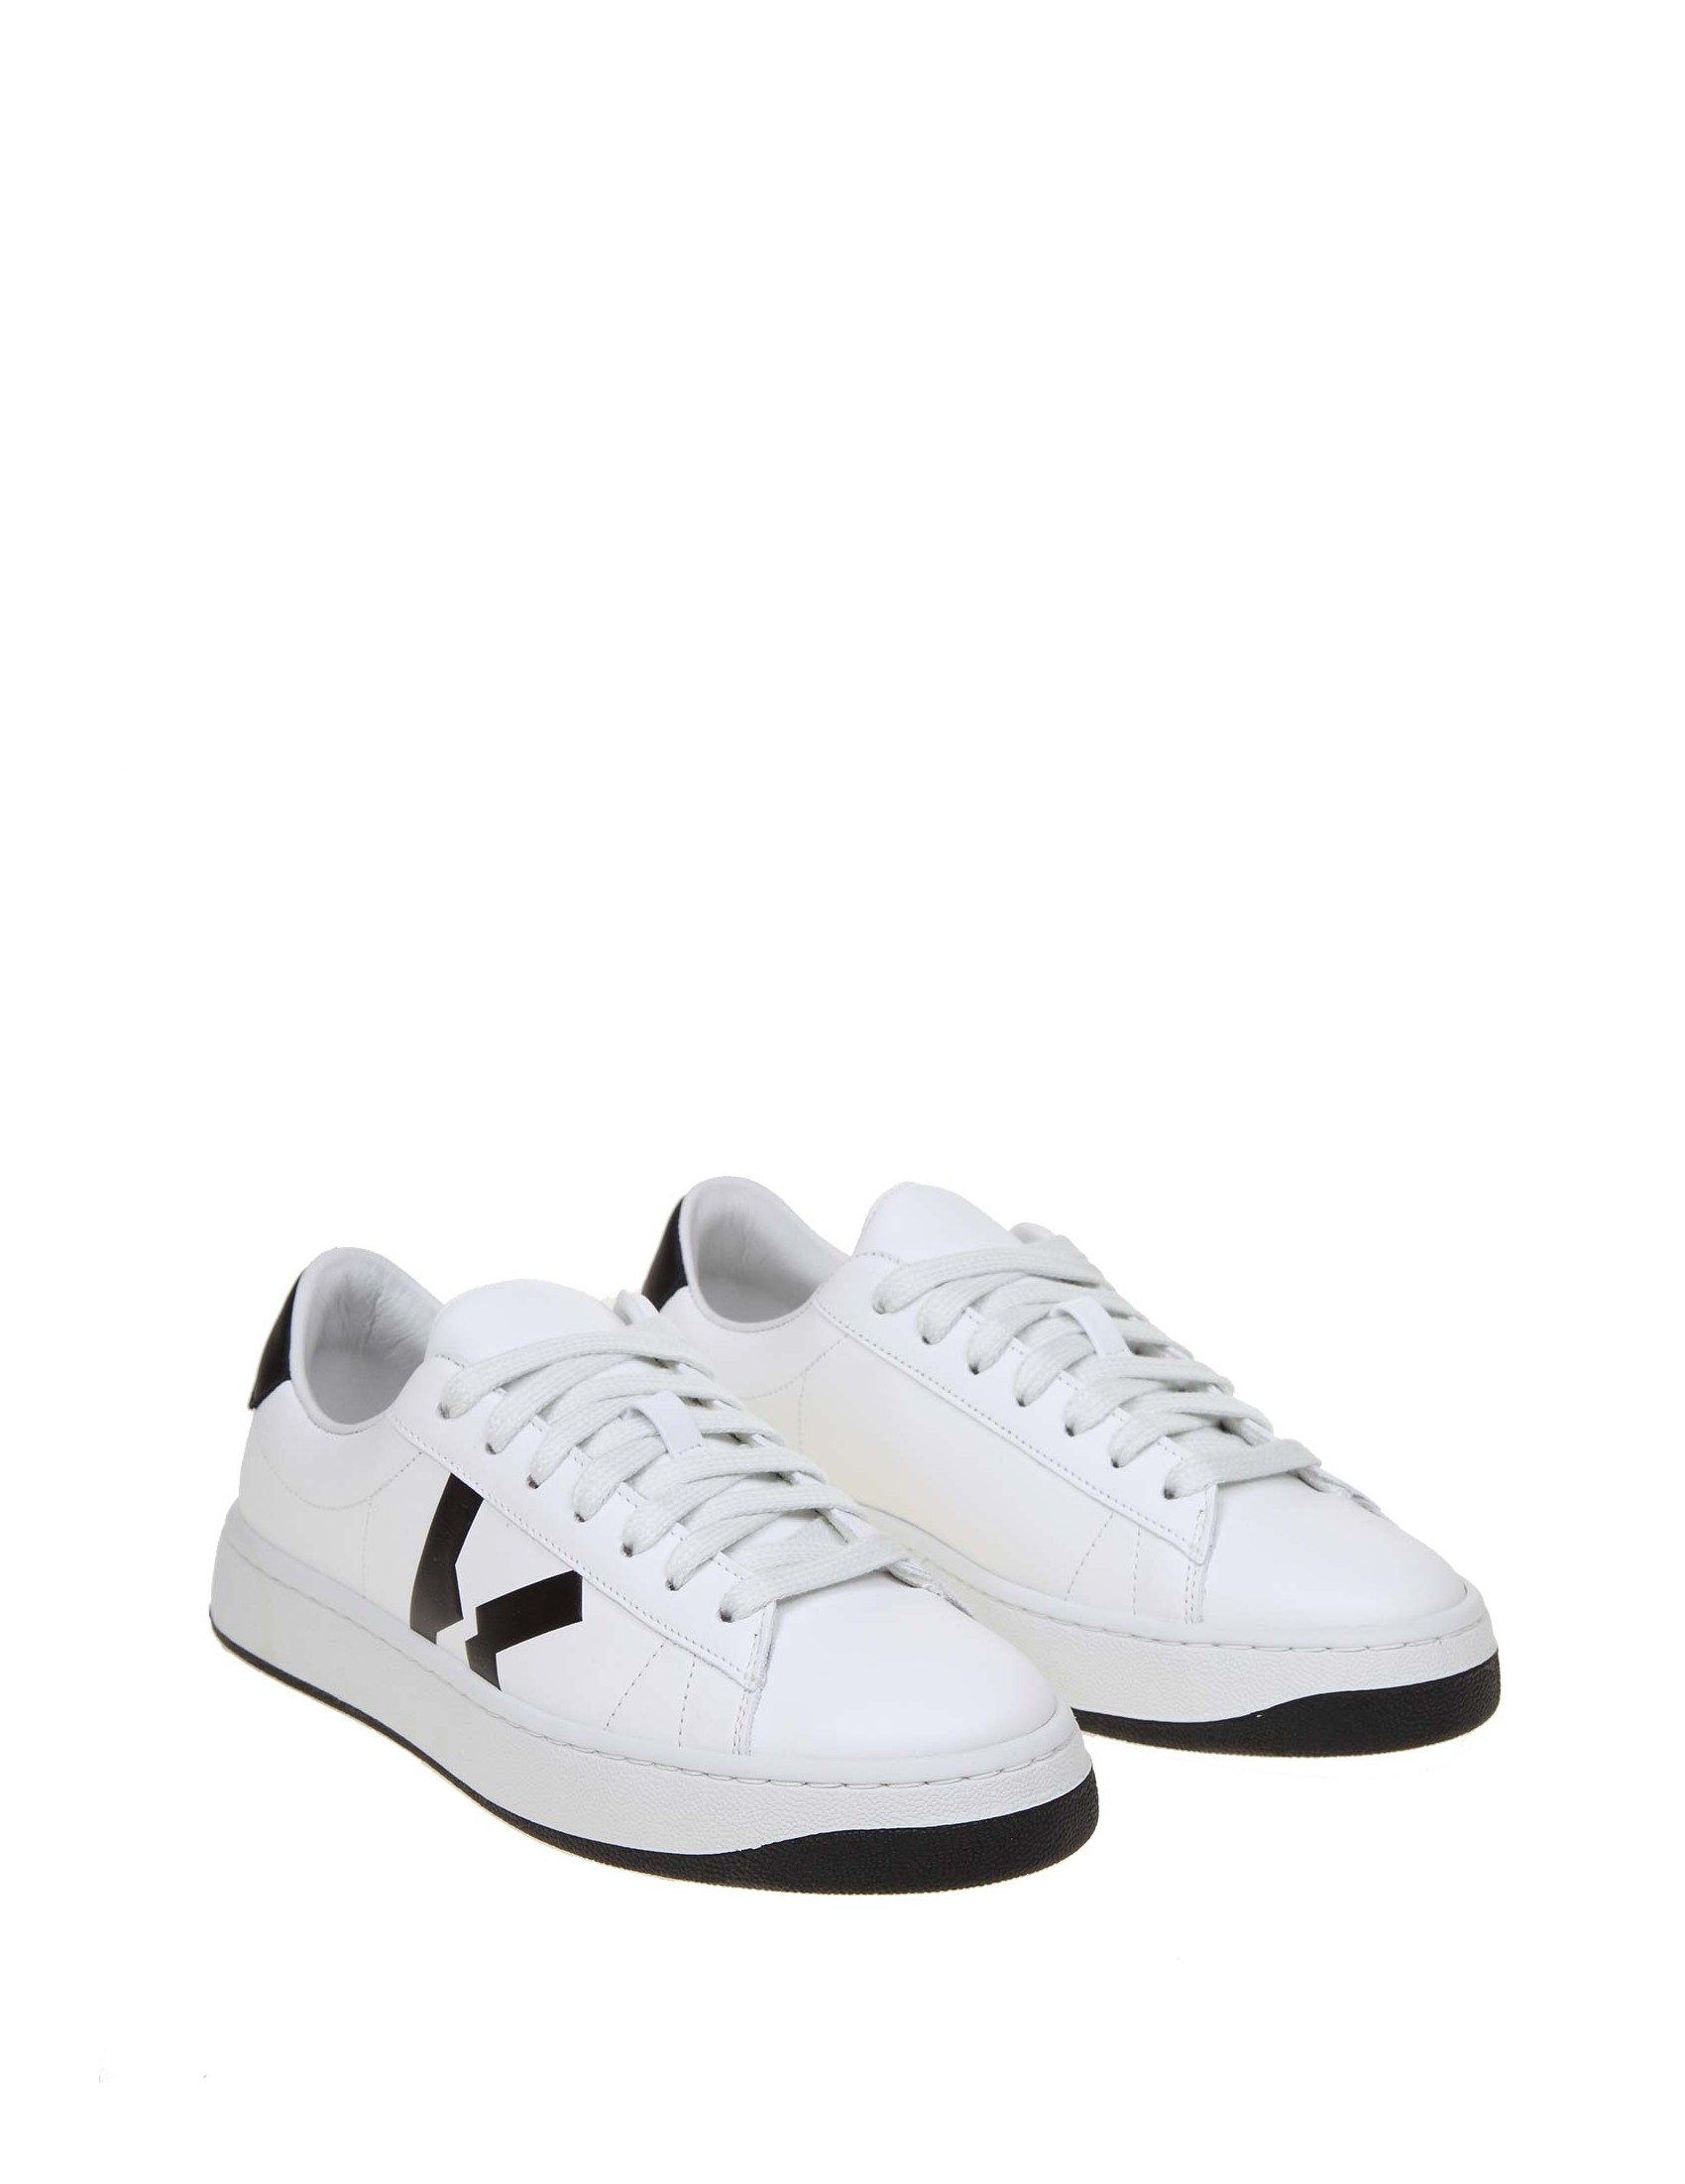 KENZO Women's Shoes Sneakers White NIB Authentic 37 38 39 40 | eBay